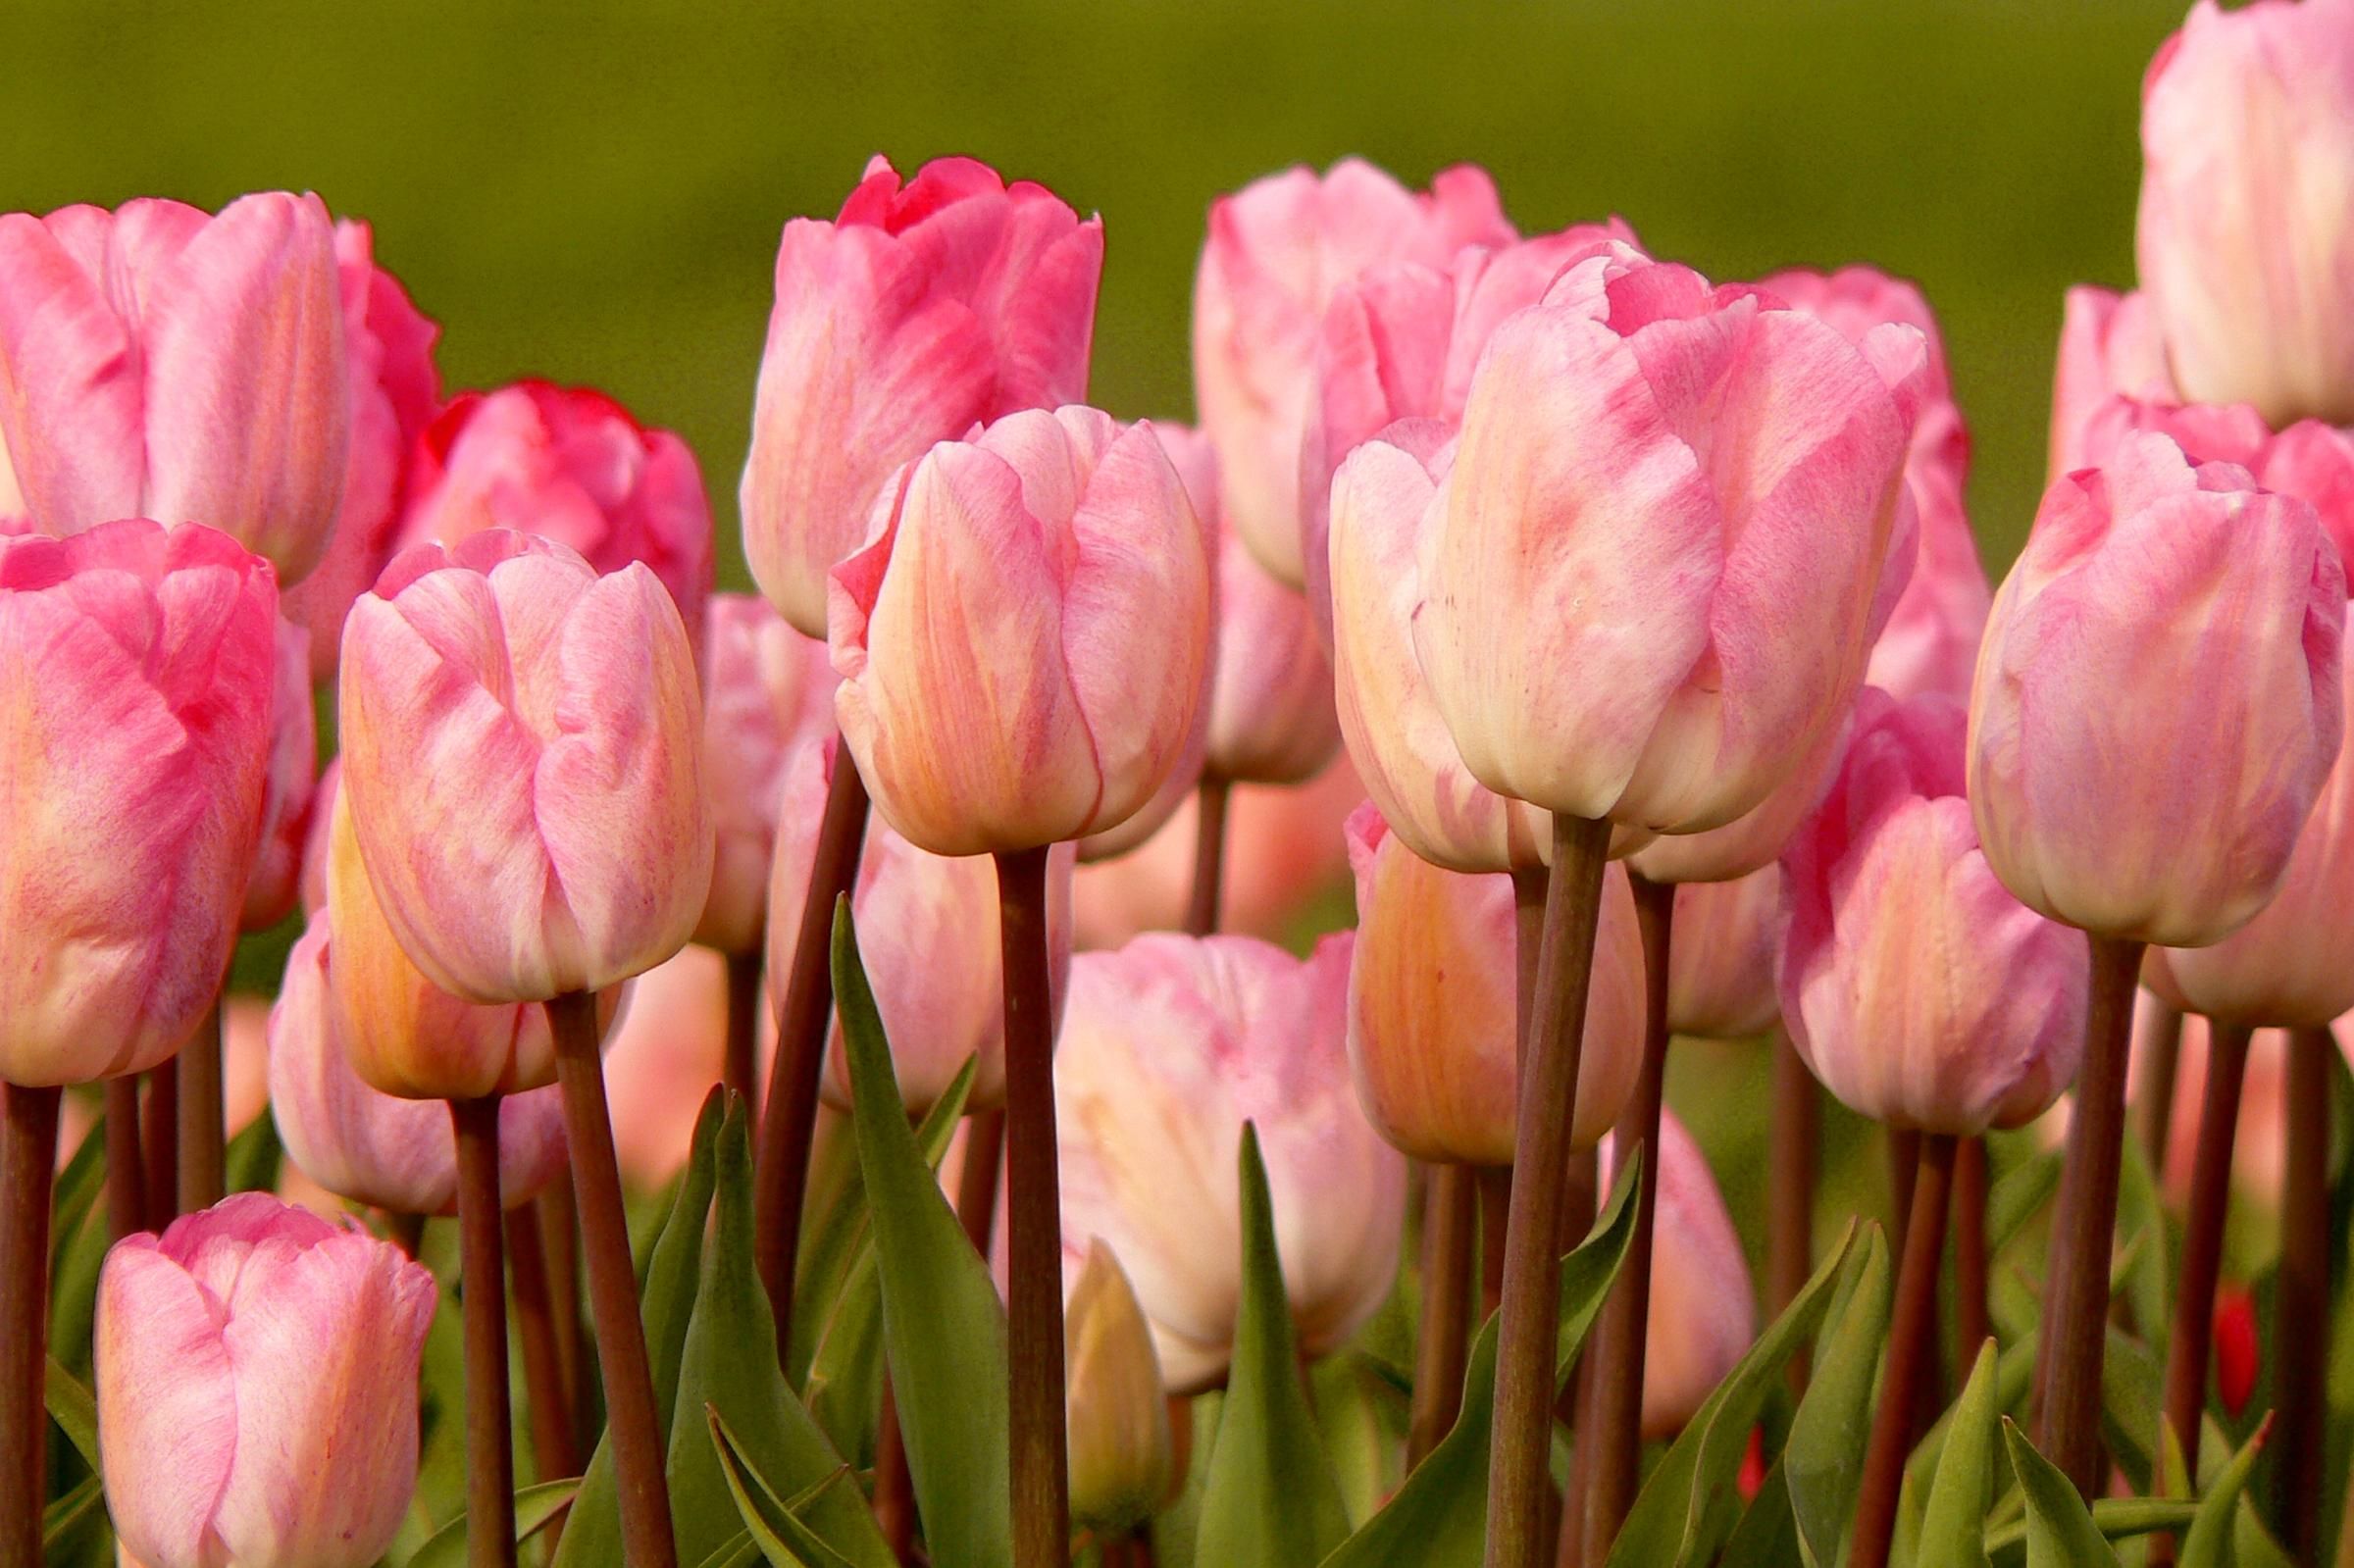 720p fondos de pantalla para android,flor,planta floreciendo,pétalo,tulipán,rosado